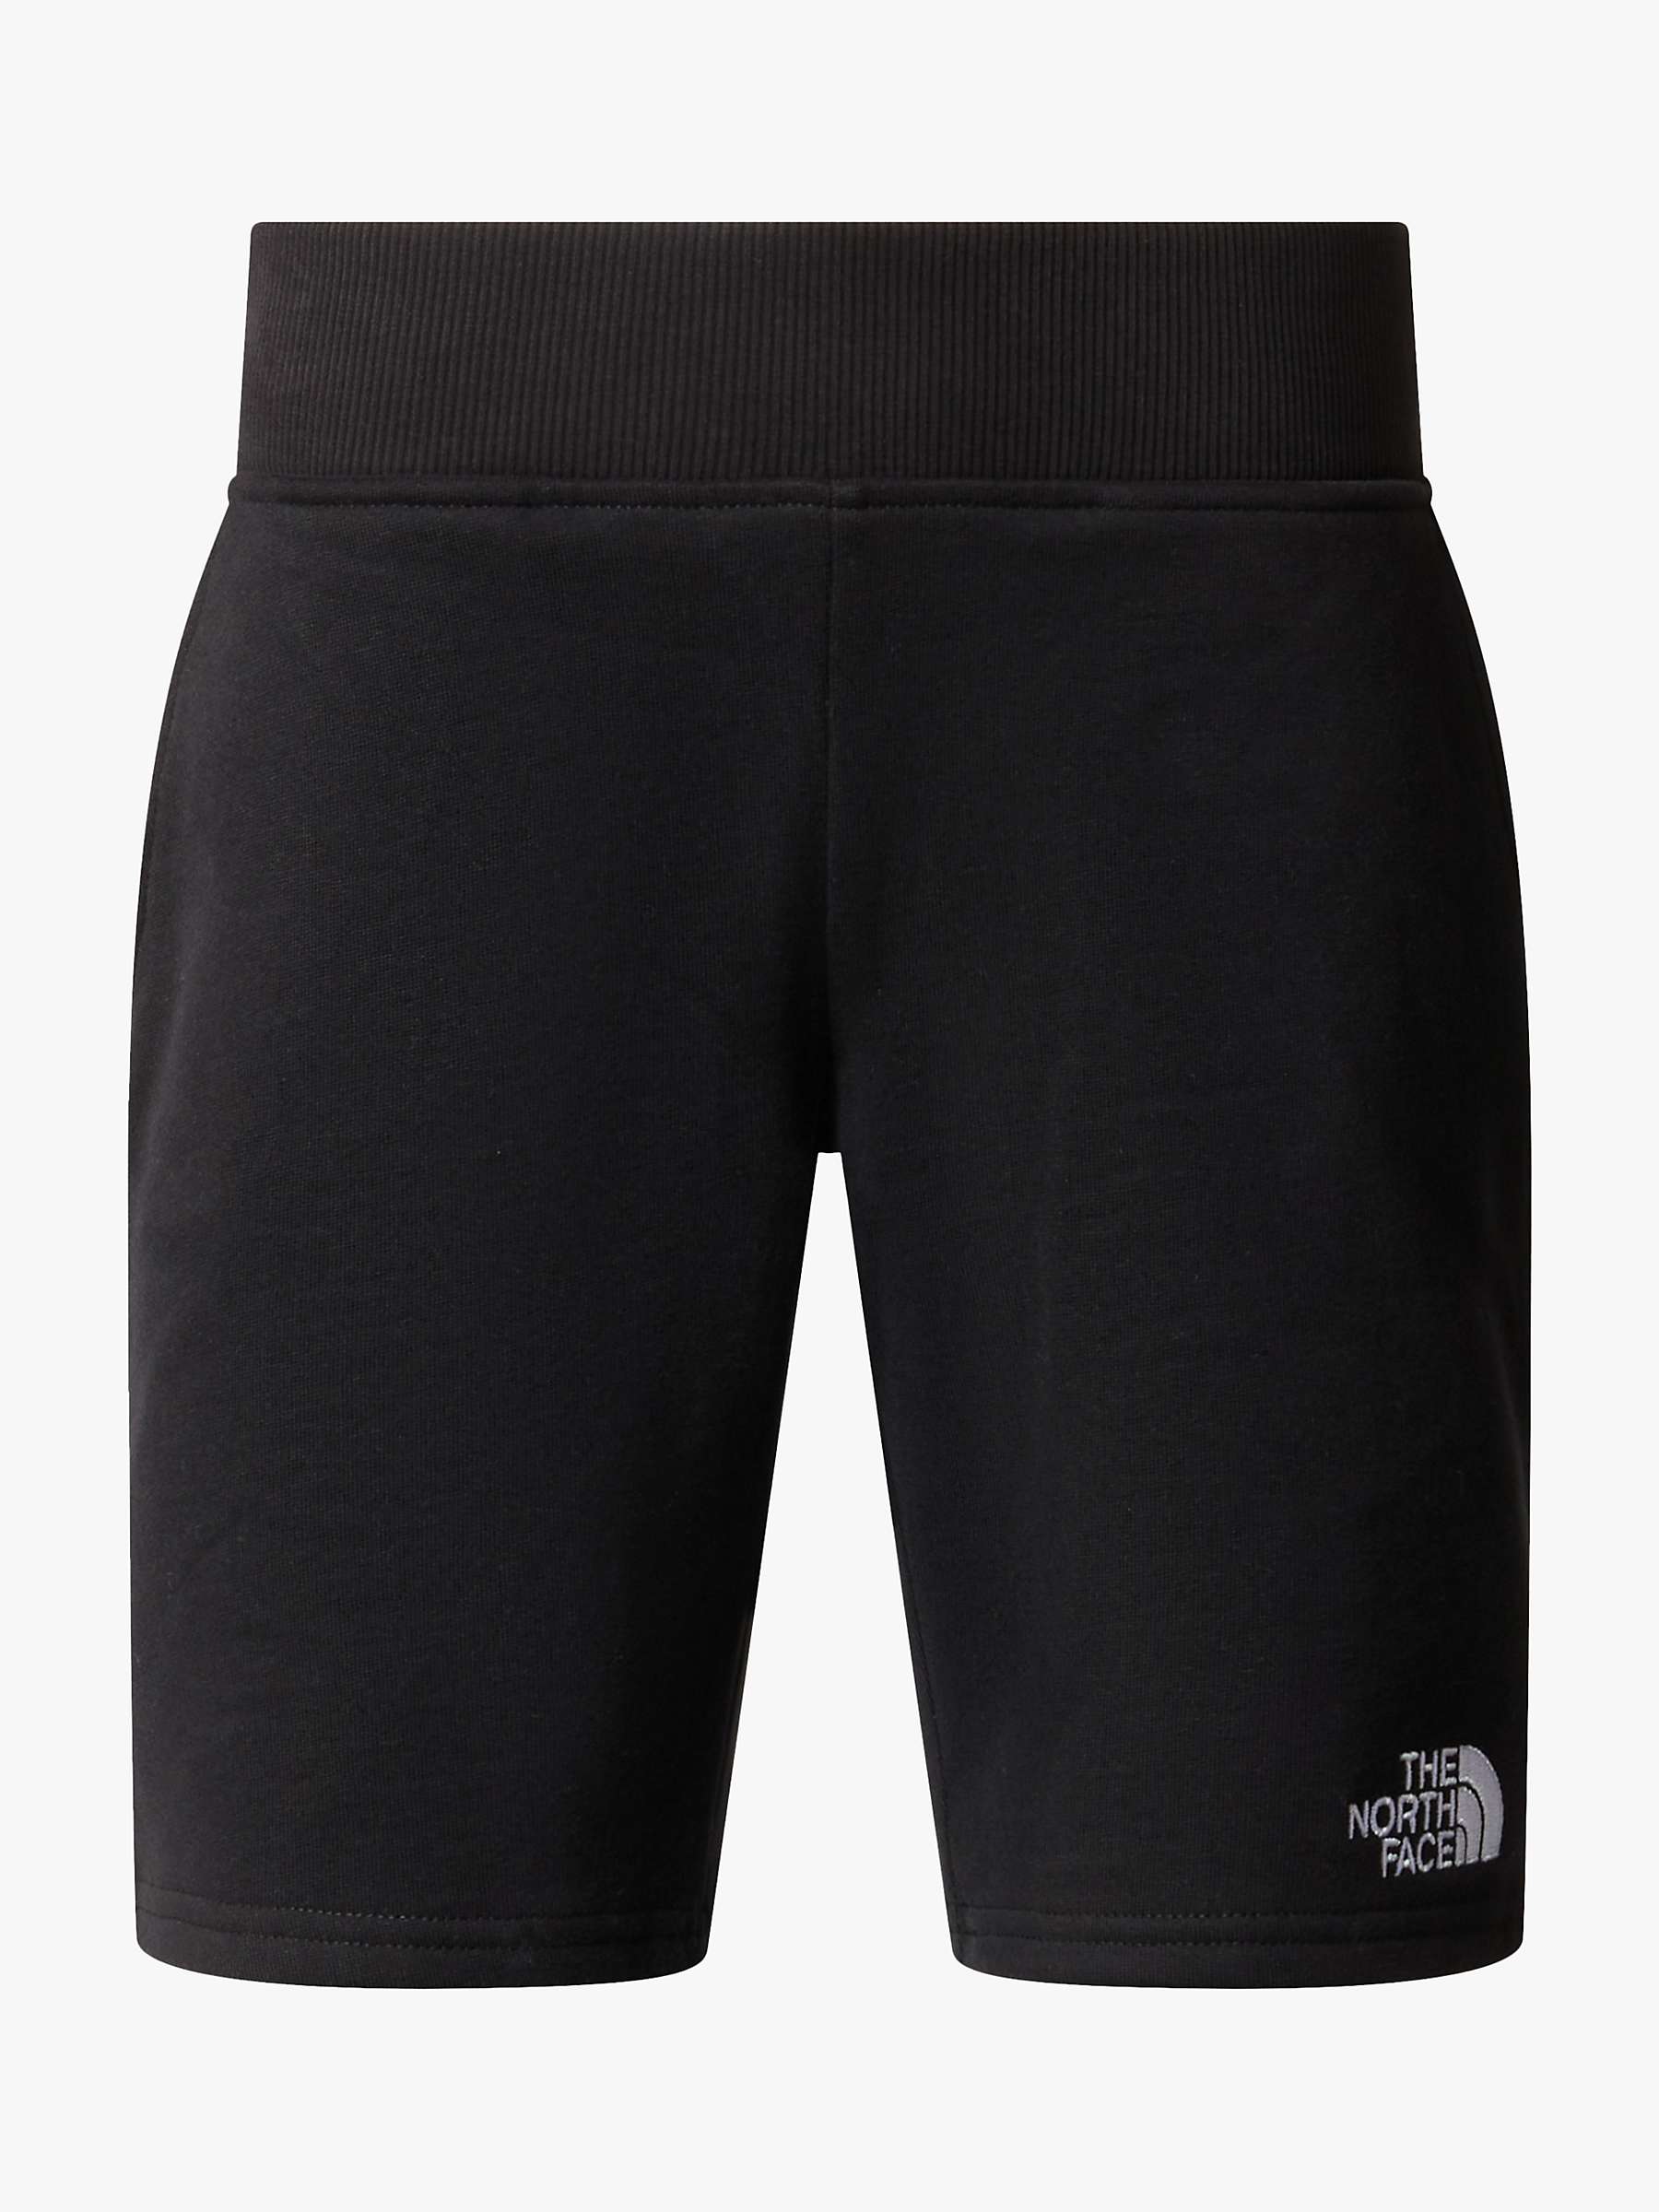 Buy The North Face Kids' Logo Cotton Shorts, Black Online at johnlewis.com